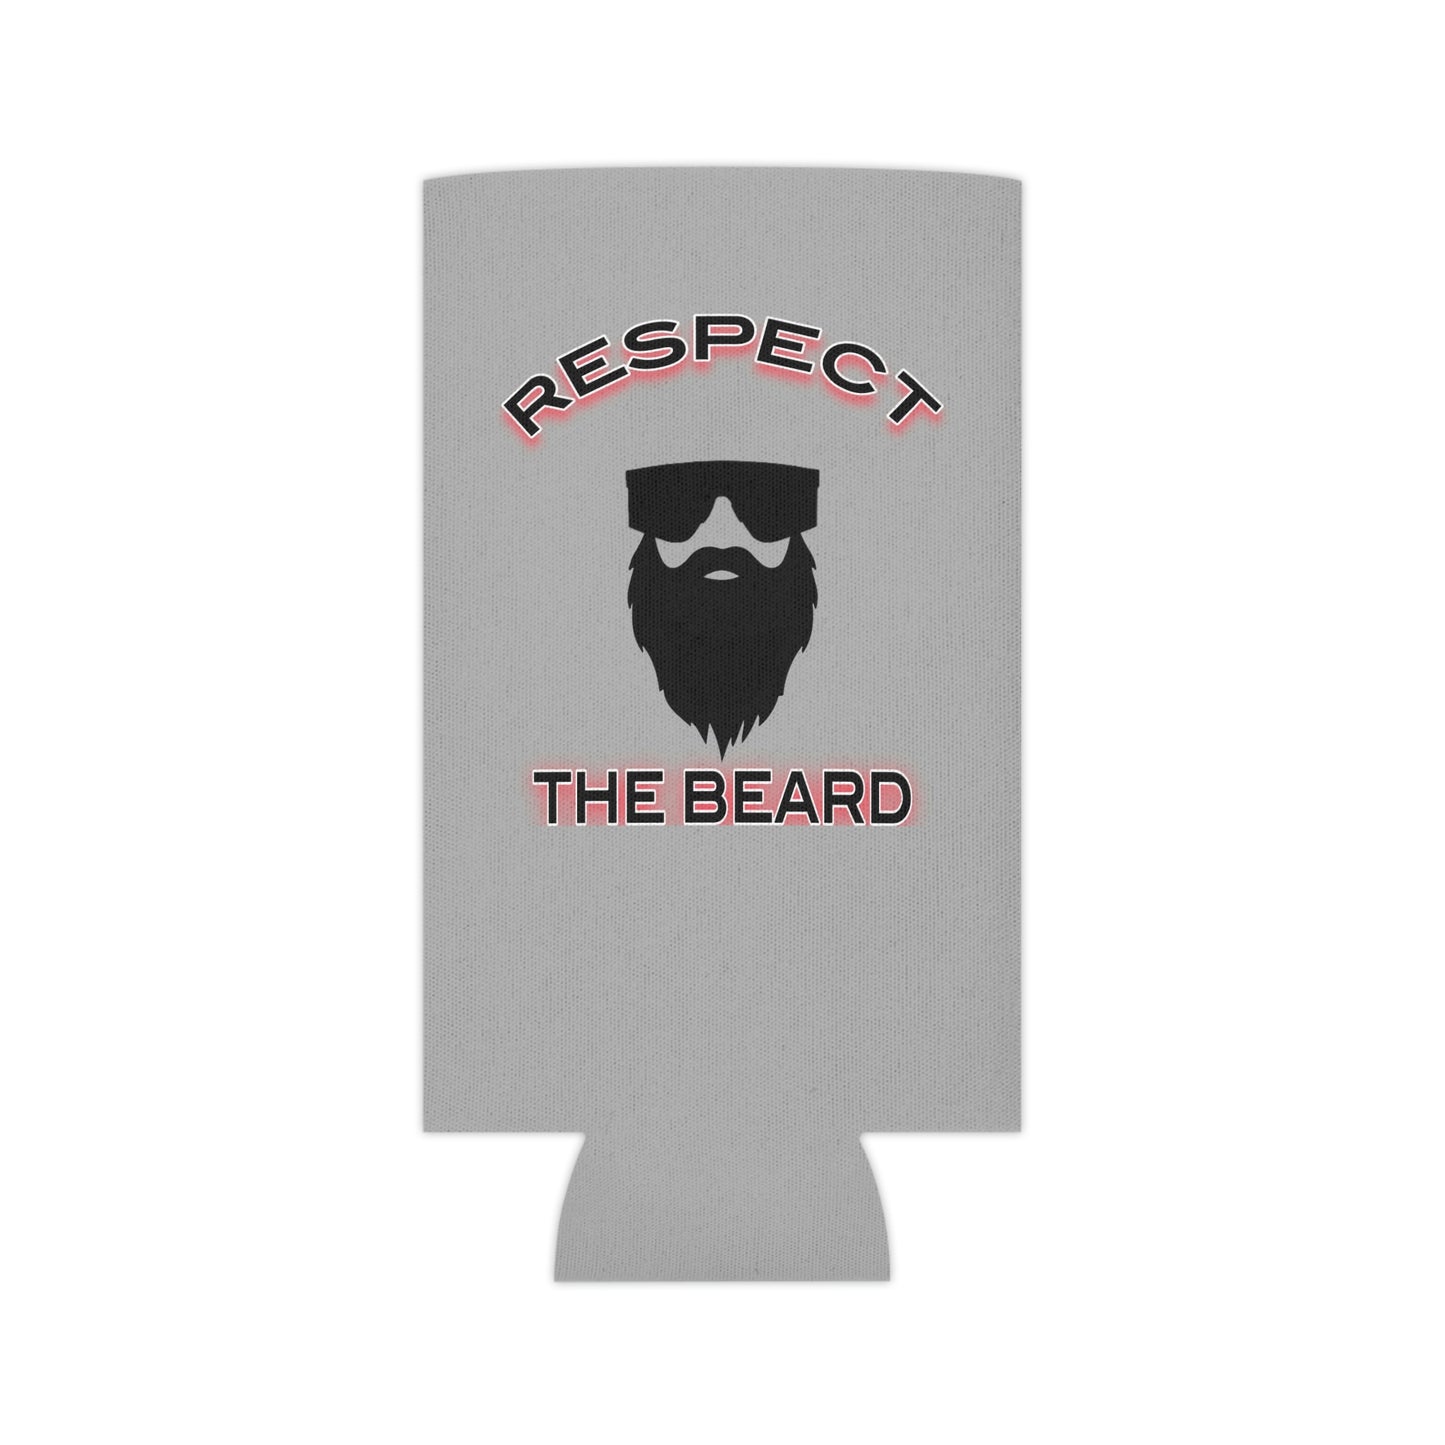 Respect The Beard Coozie - Backwoods Branding Co.